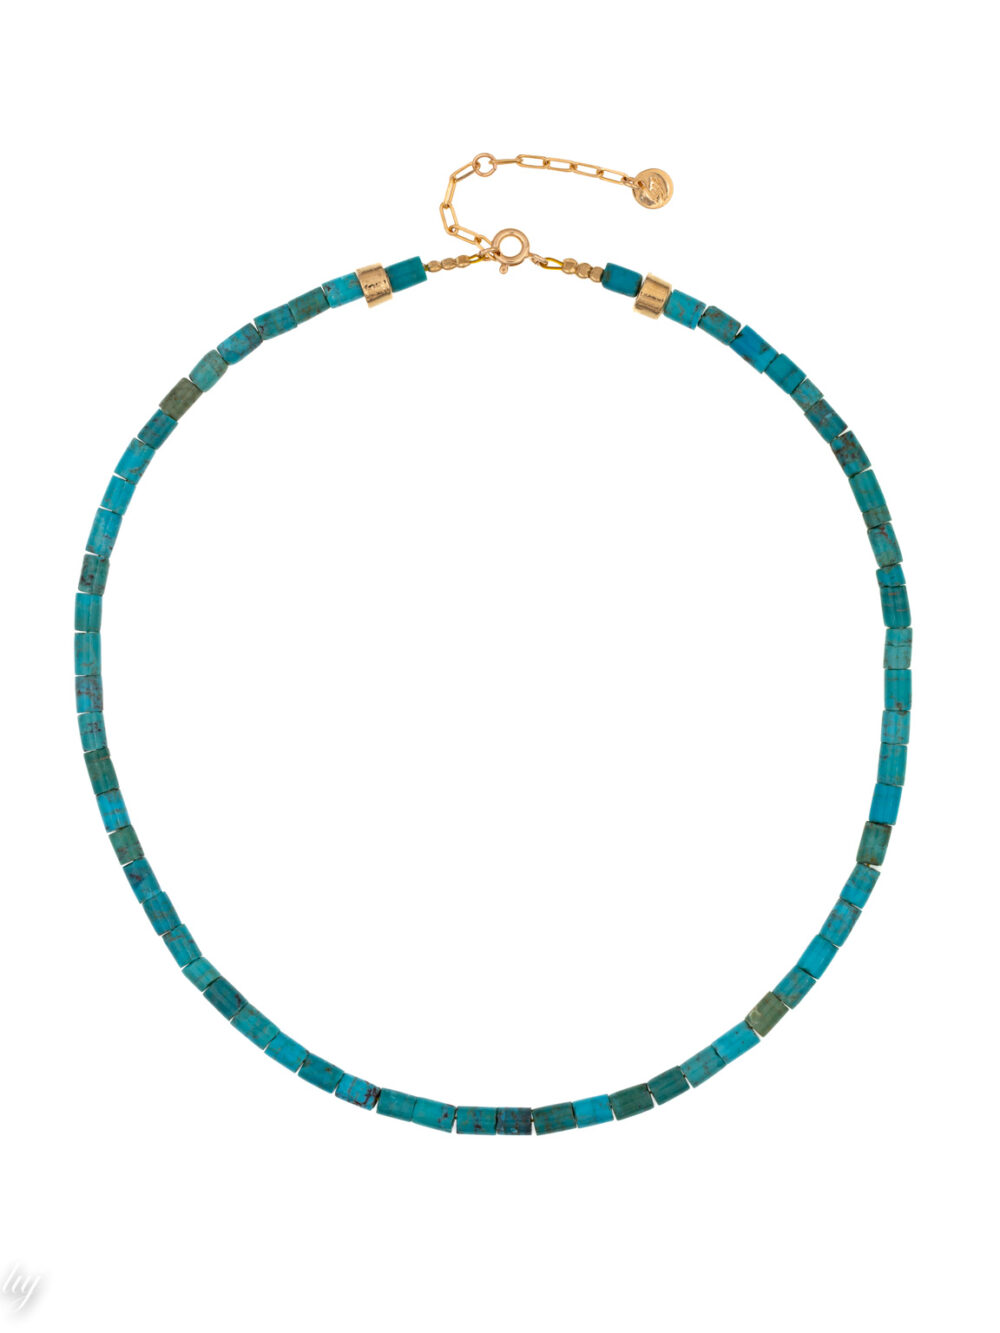 gloria-american-indian-turquoise-necklace-luj-paris-jewels